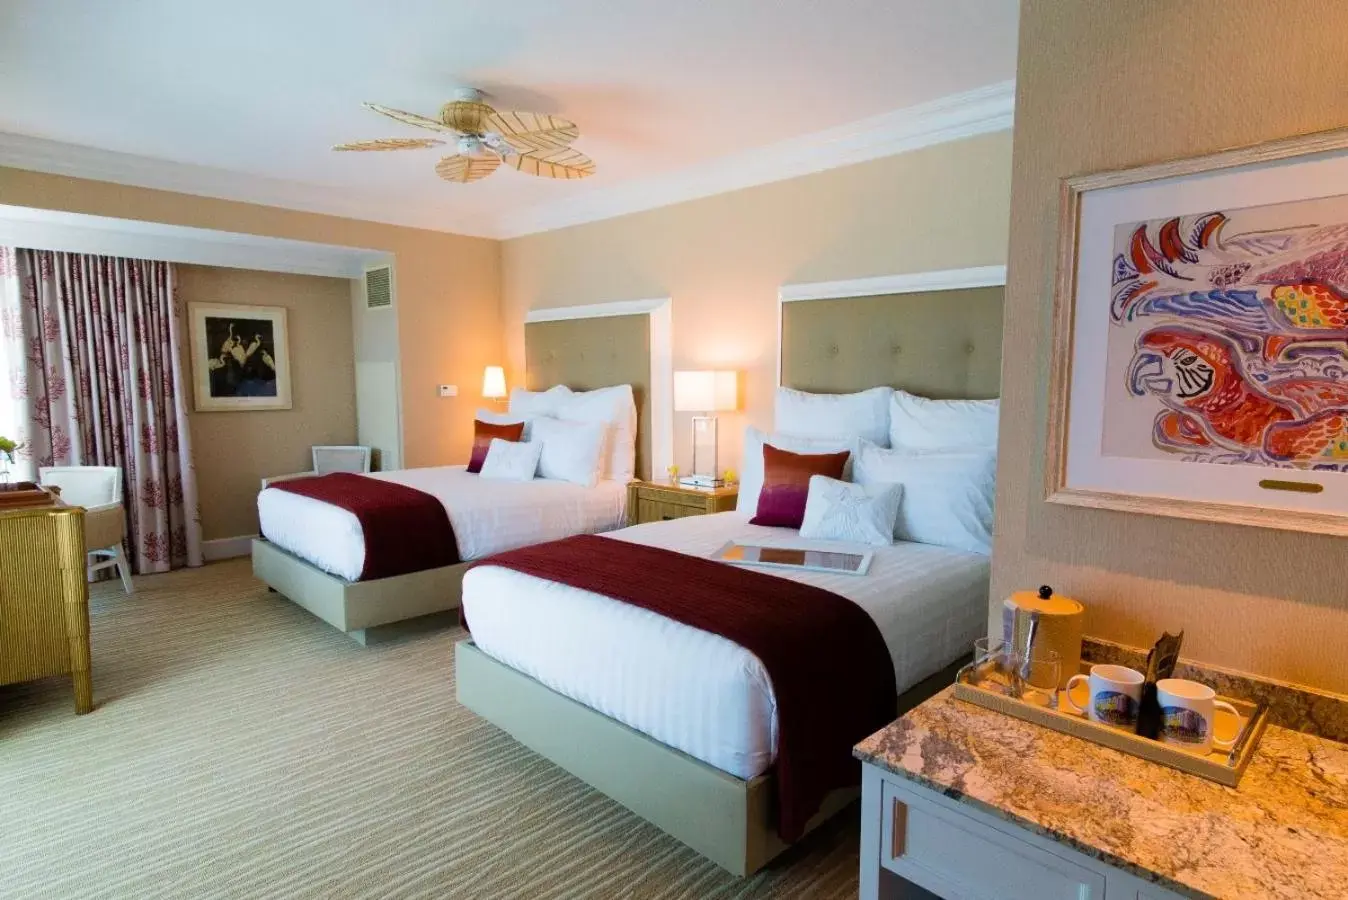 Bed in Margaritaville Resort Casino